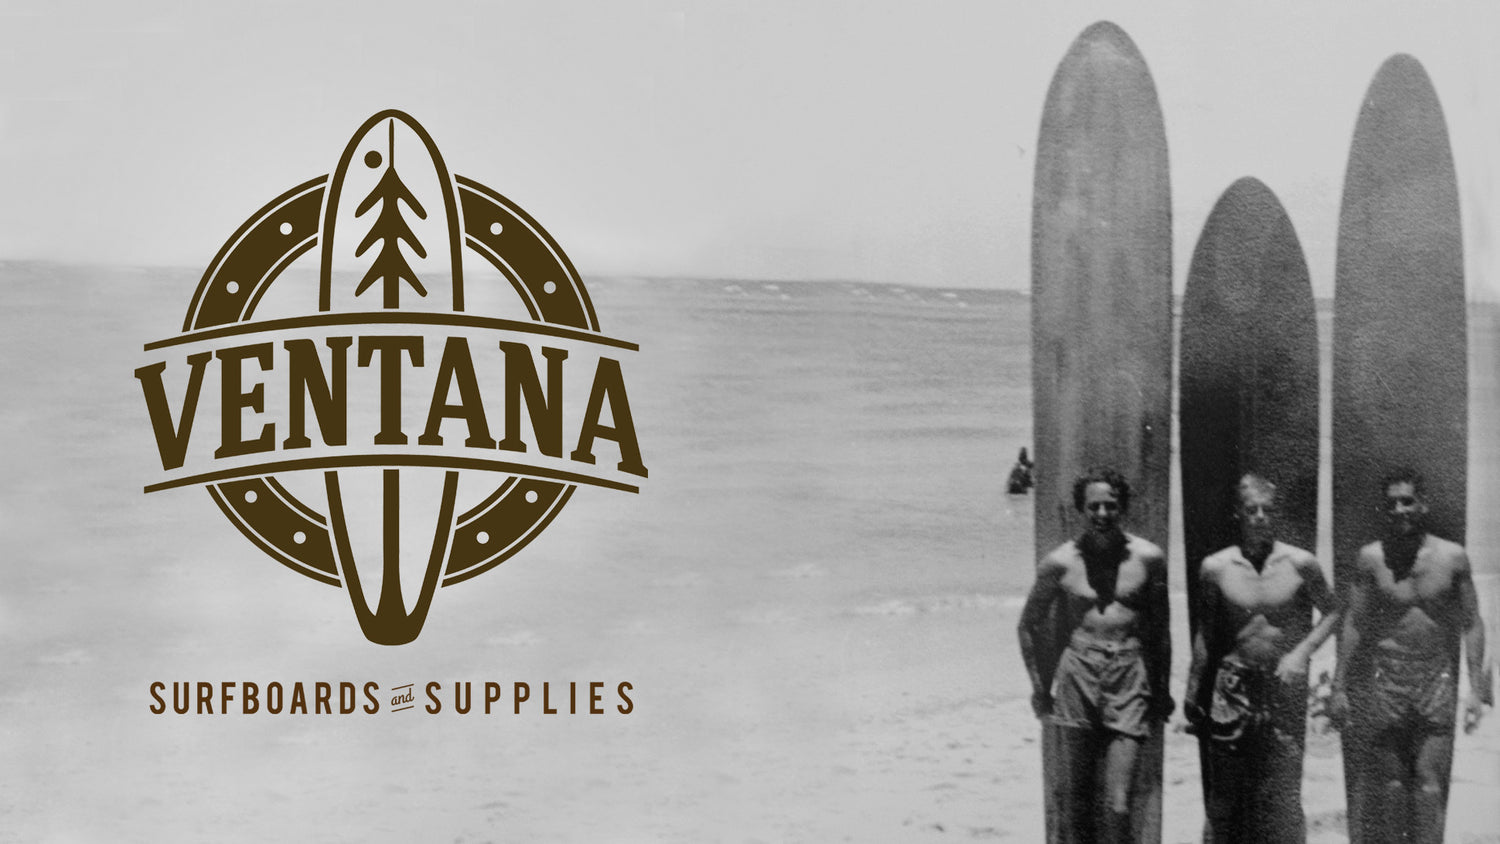 Art Honig's Piano - Ventana Surfboards & Supplies